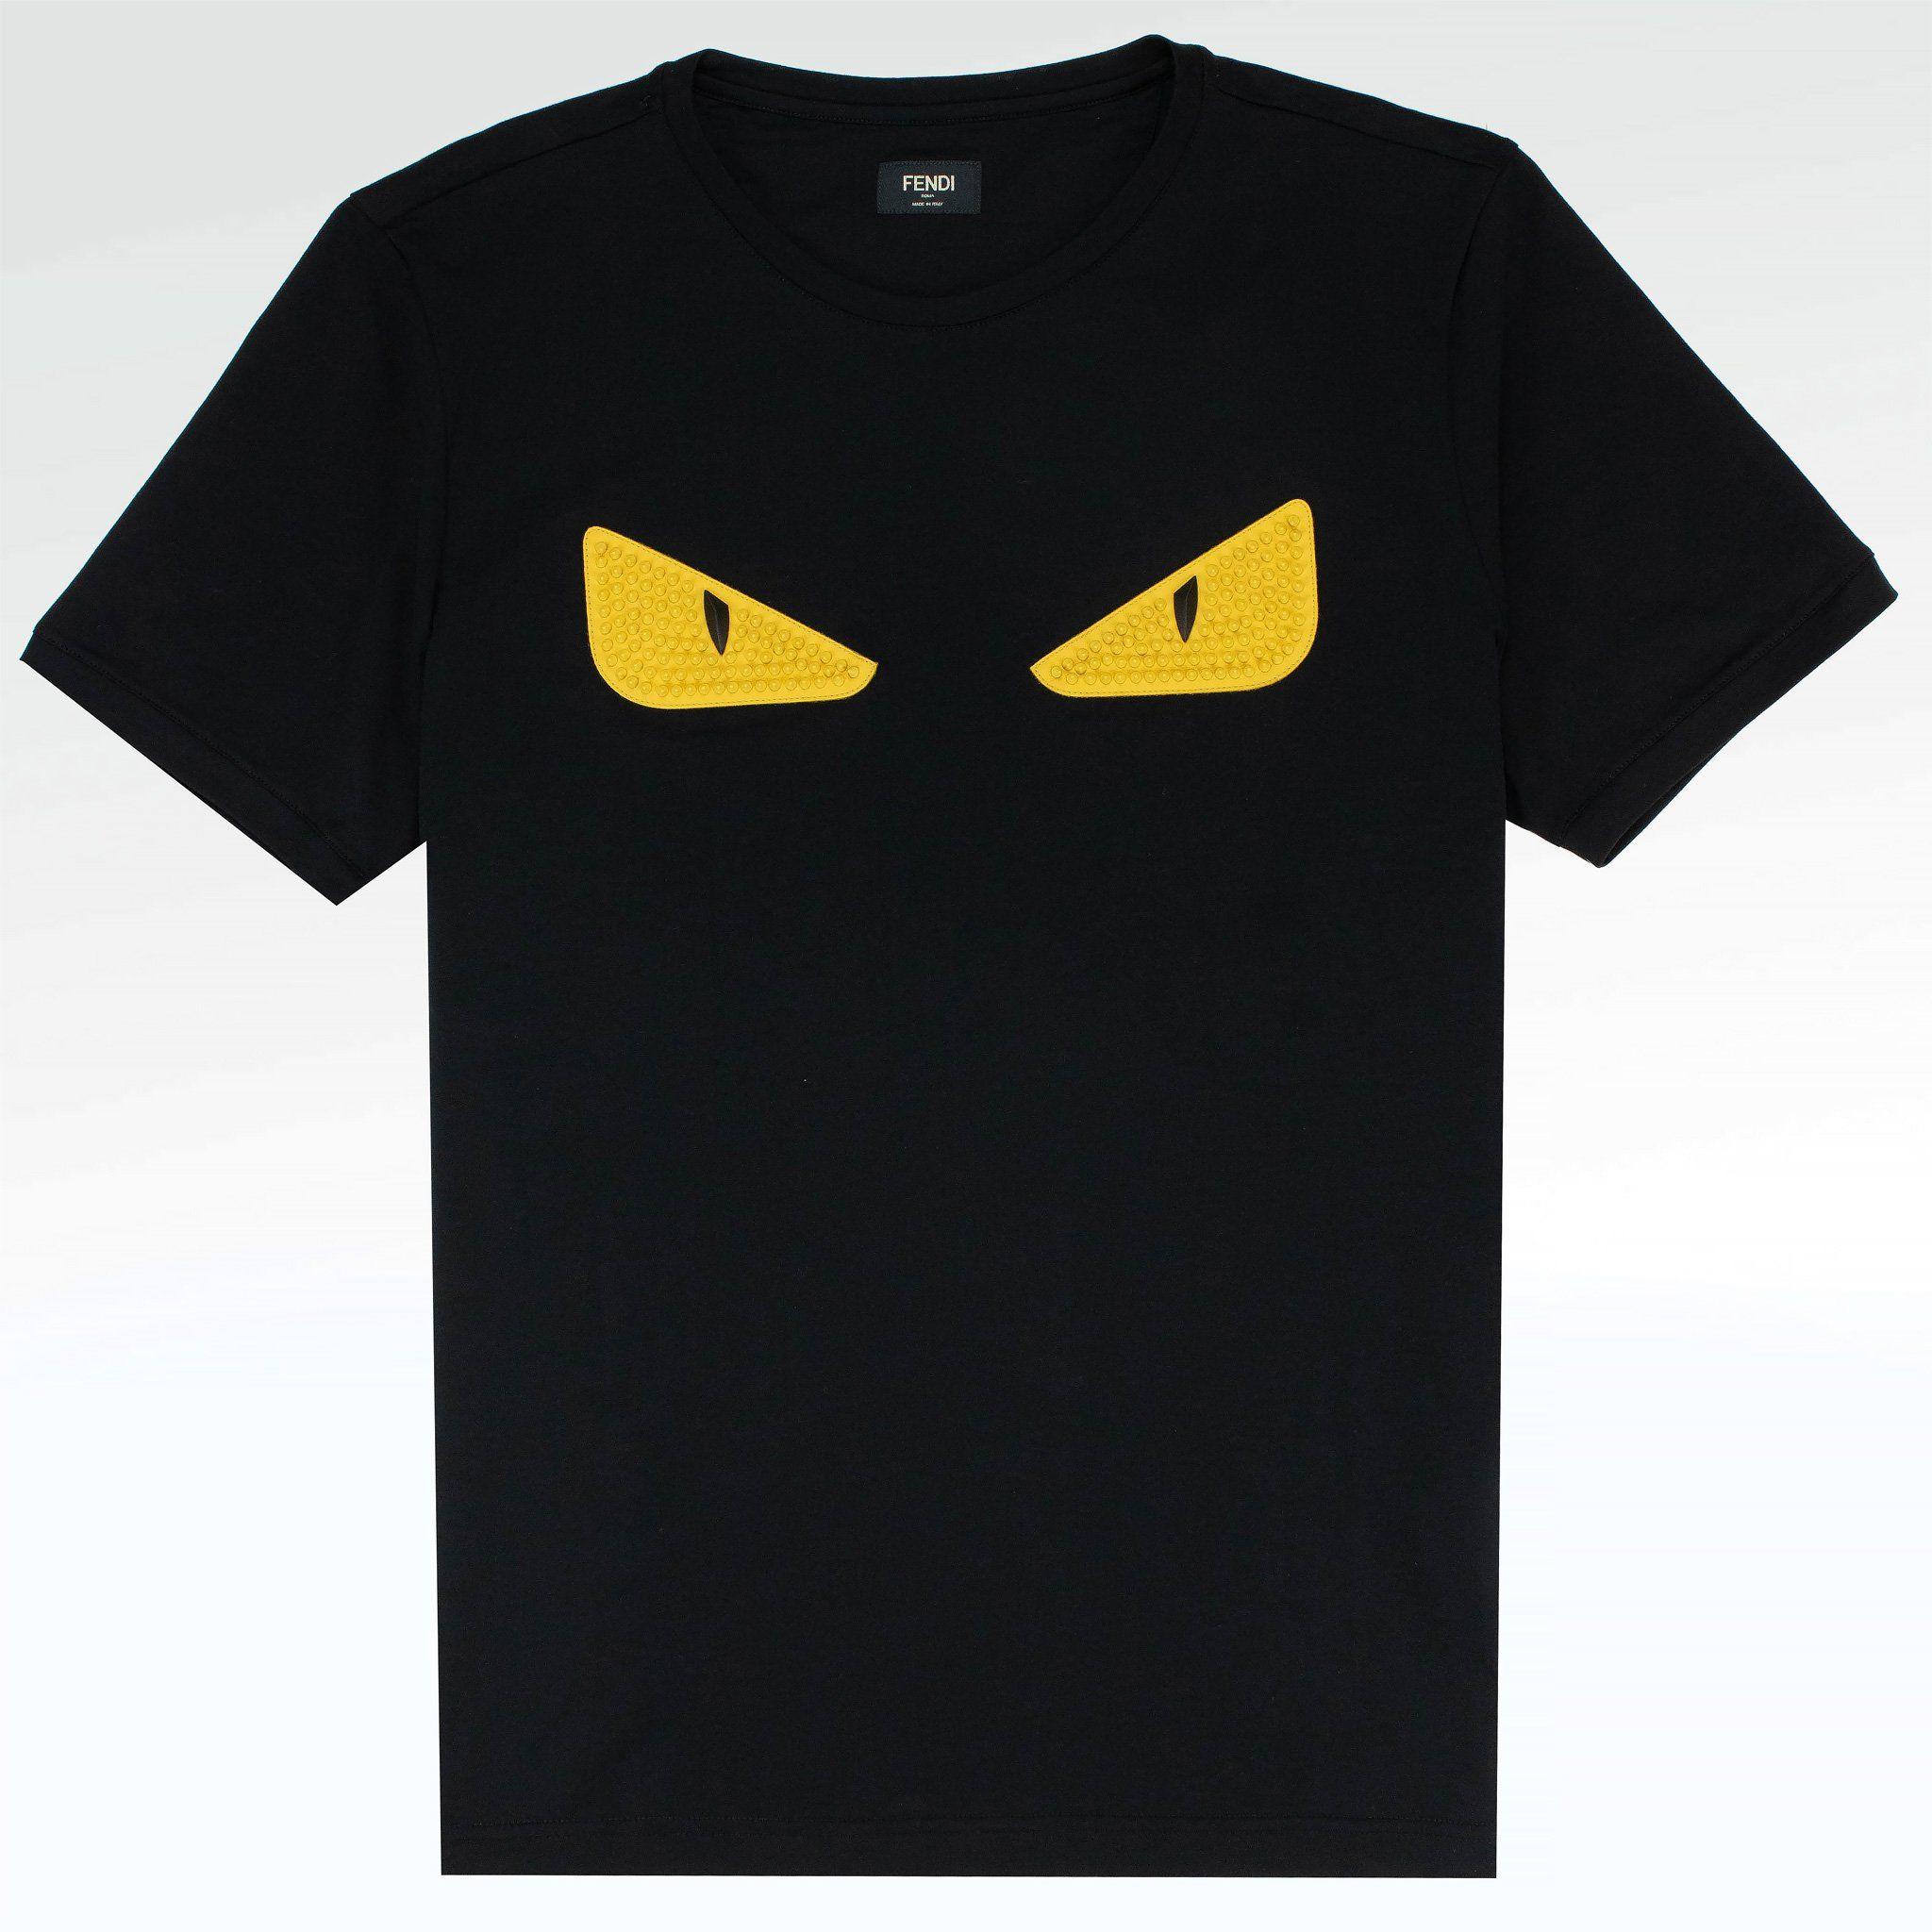 Black and Yellow Hand Logo - Fendi Monster Eyes Studded Logo T Shirt Black Yellow